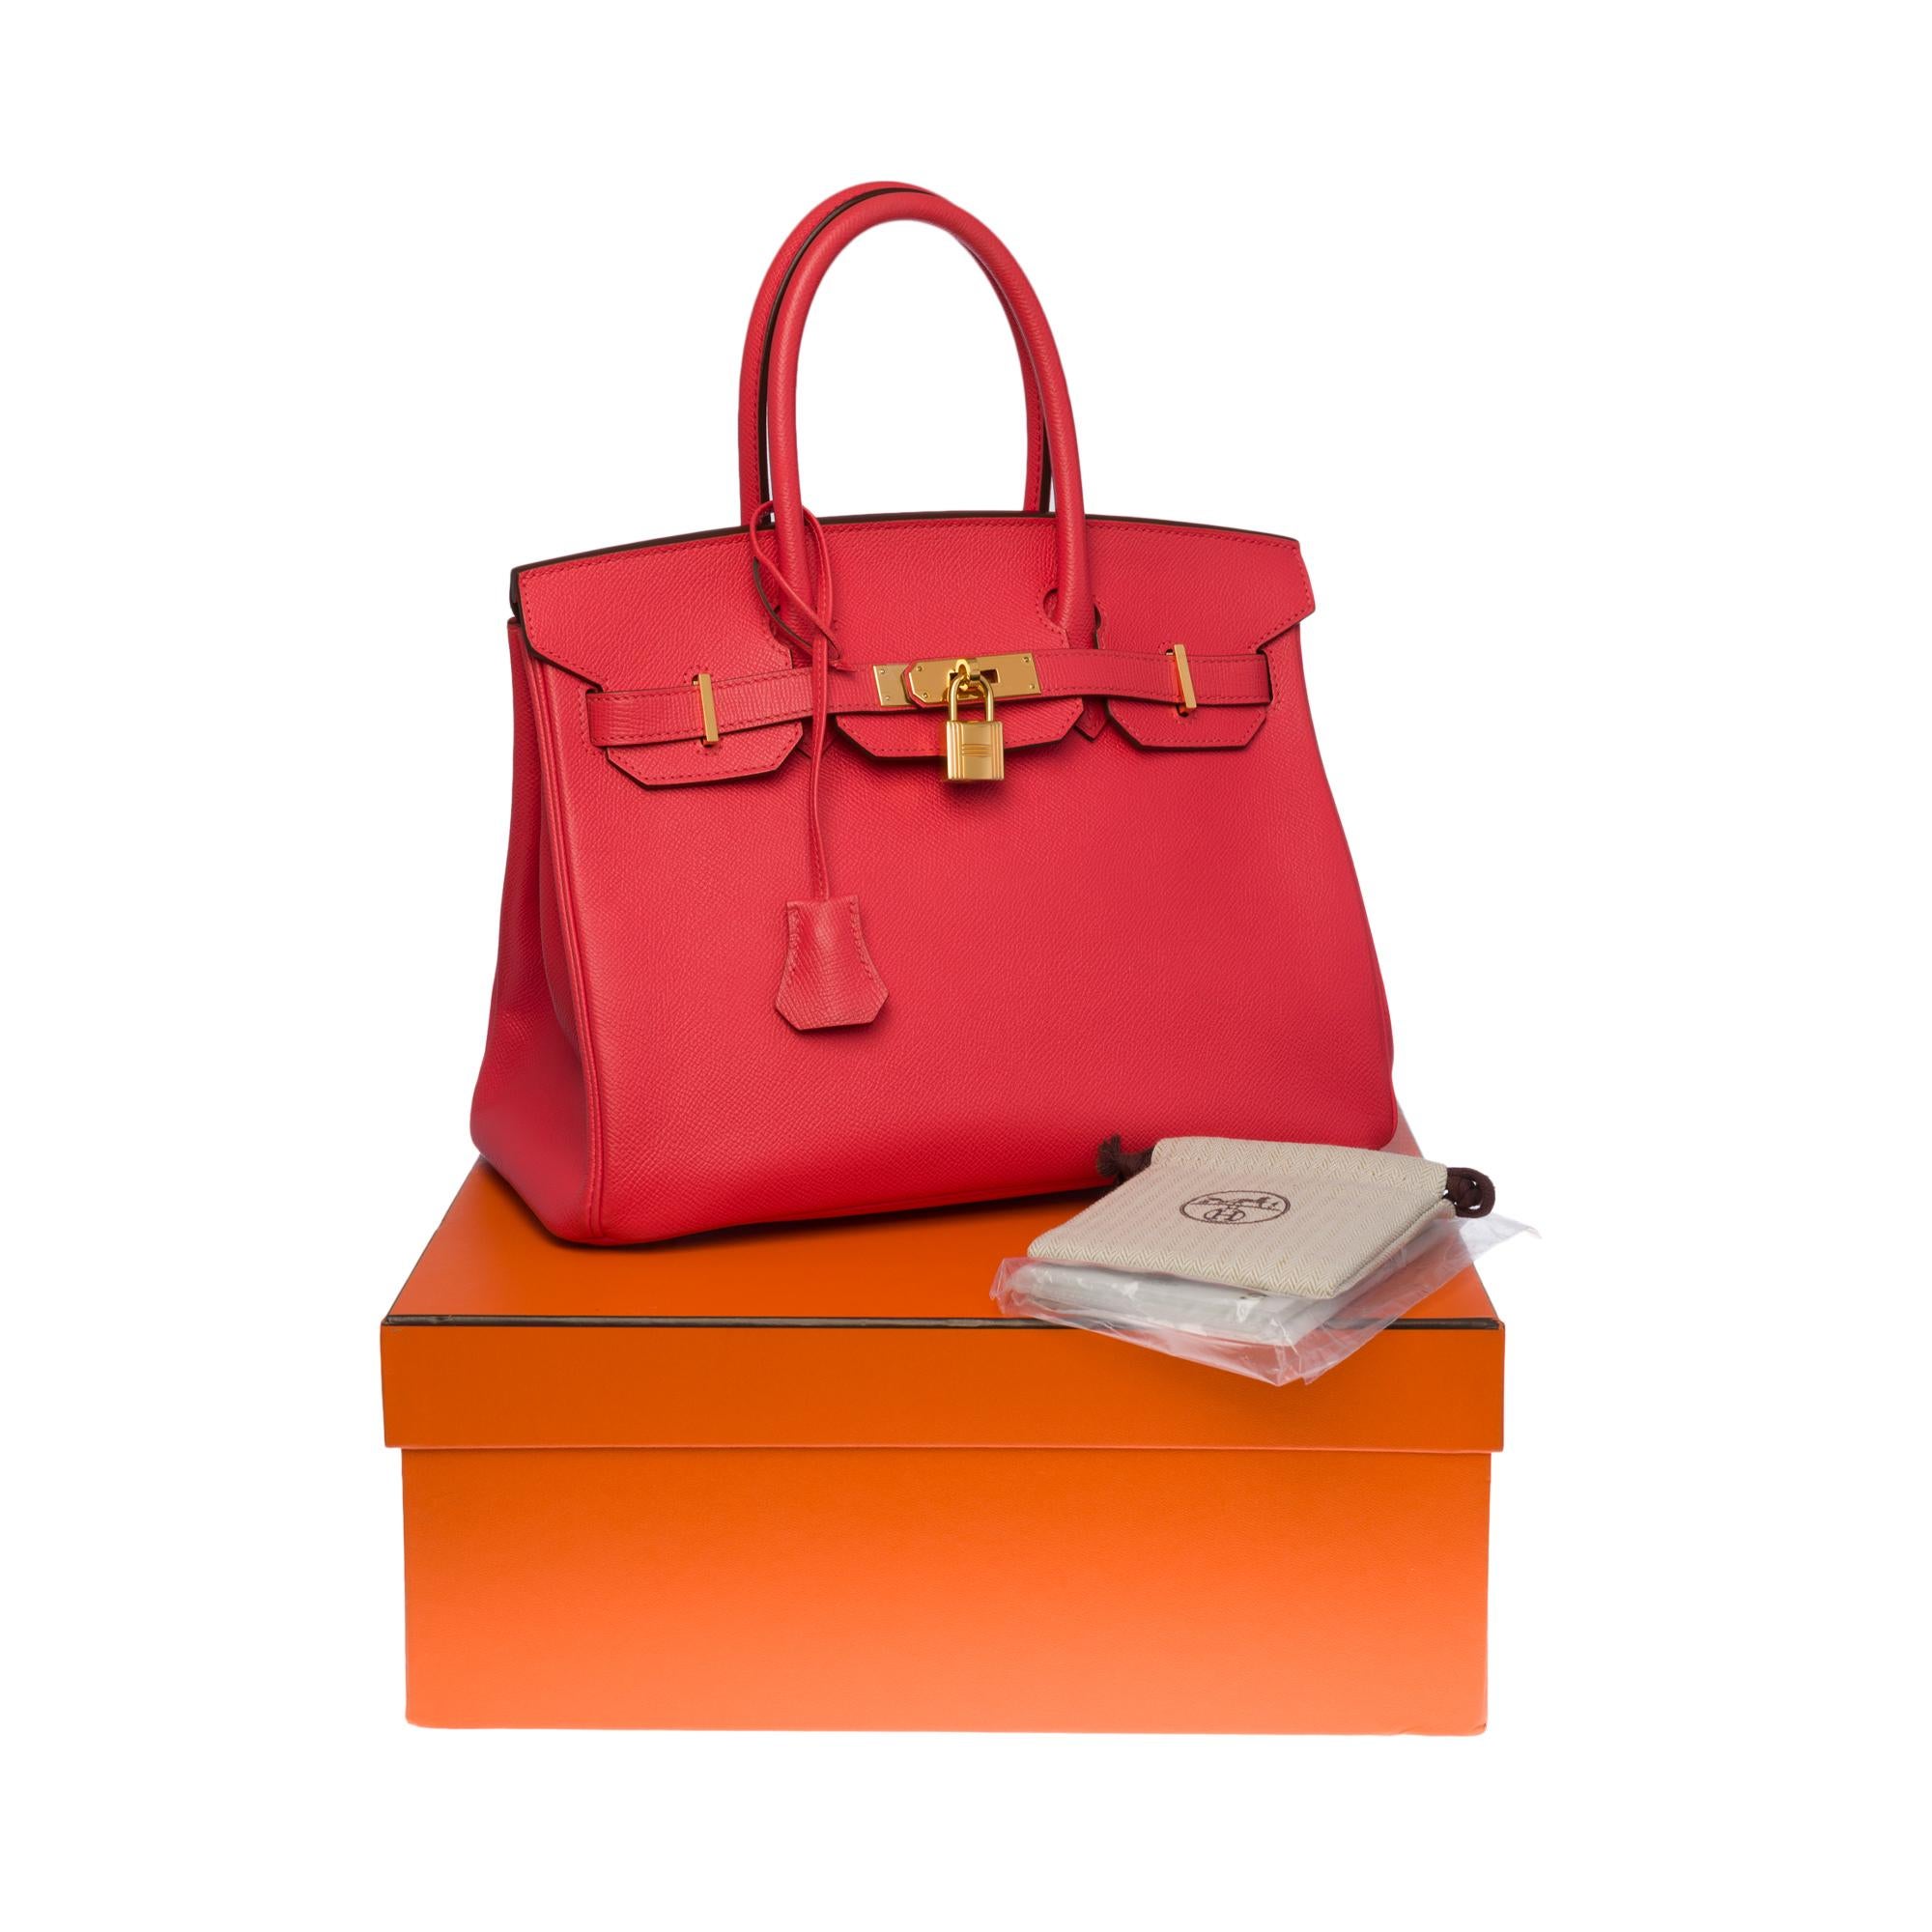 Almost New - Hermès Birkin 30 handbag in Rose Jaïpur Epsom leather, GHW 6